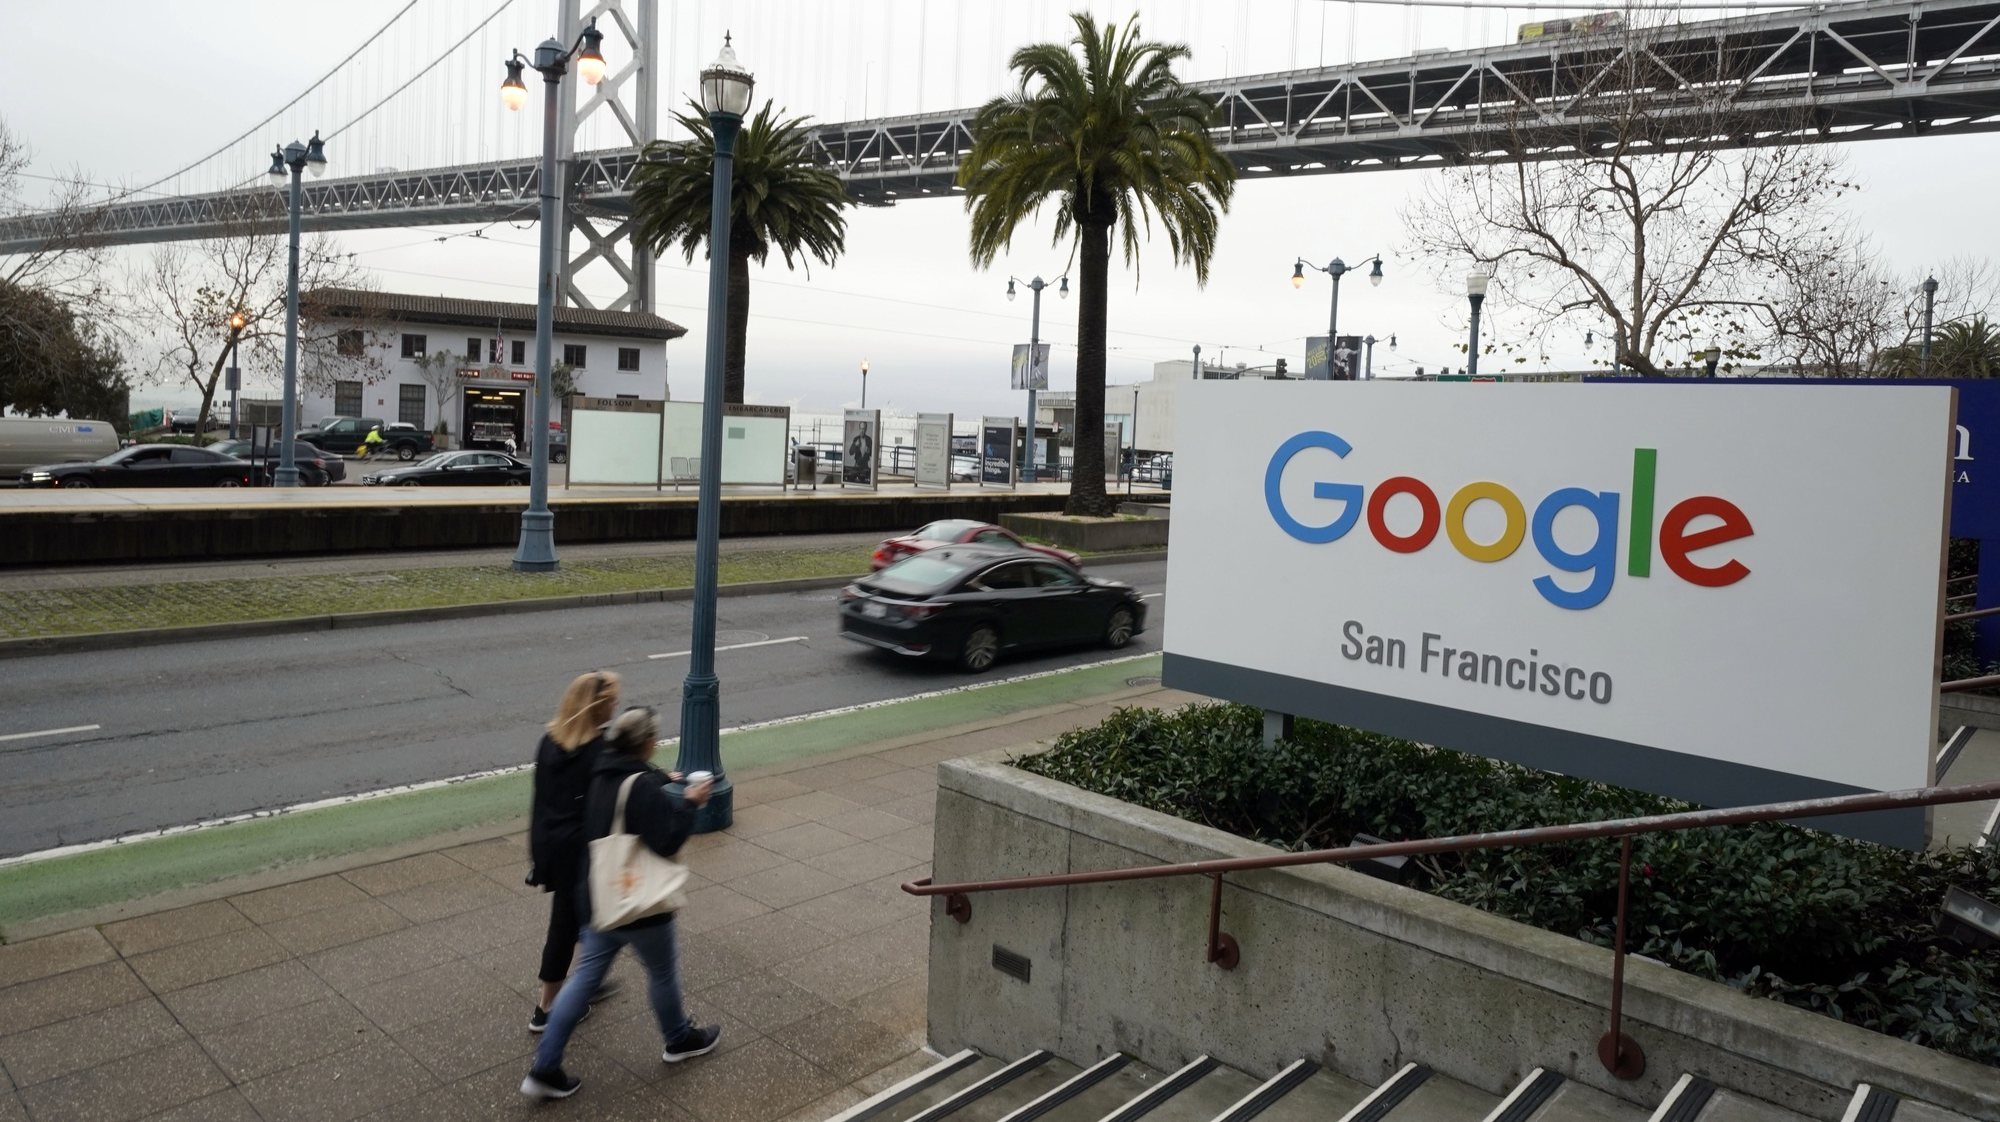 epa08173881 Pedestrians walk past the Google San Francisco sign before the start of the Google Artificial Intelligence event in San Francisco, California, USA, 28 January 2020.  EPA/MONICA M. DAVEY